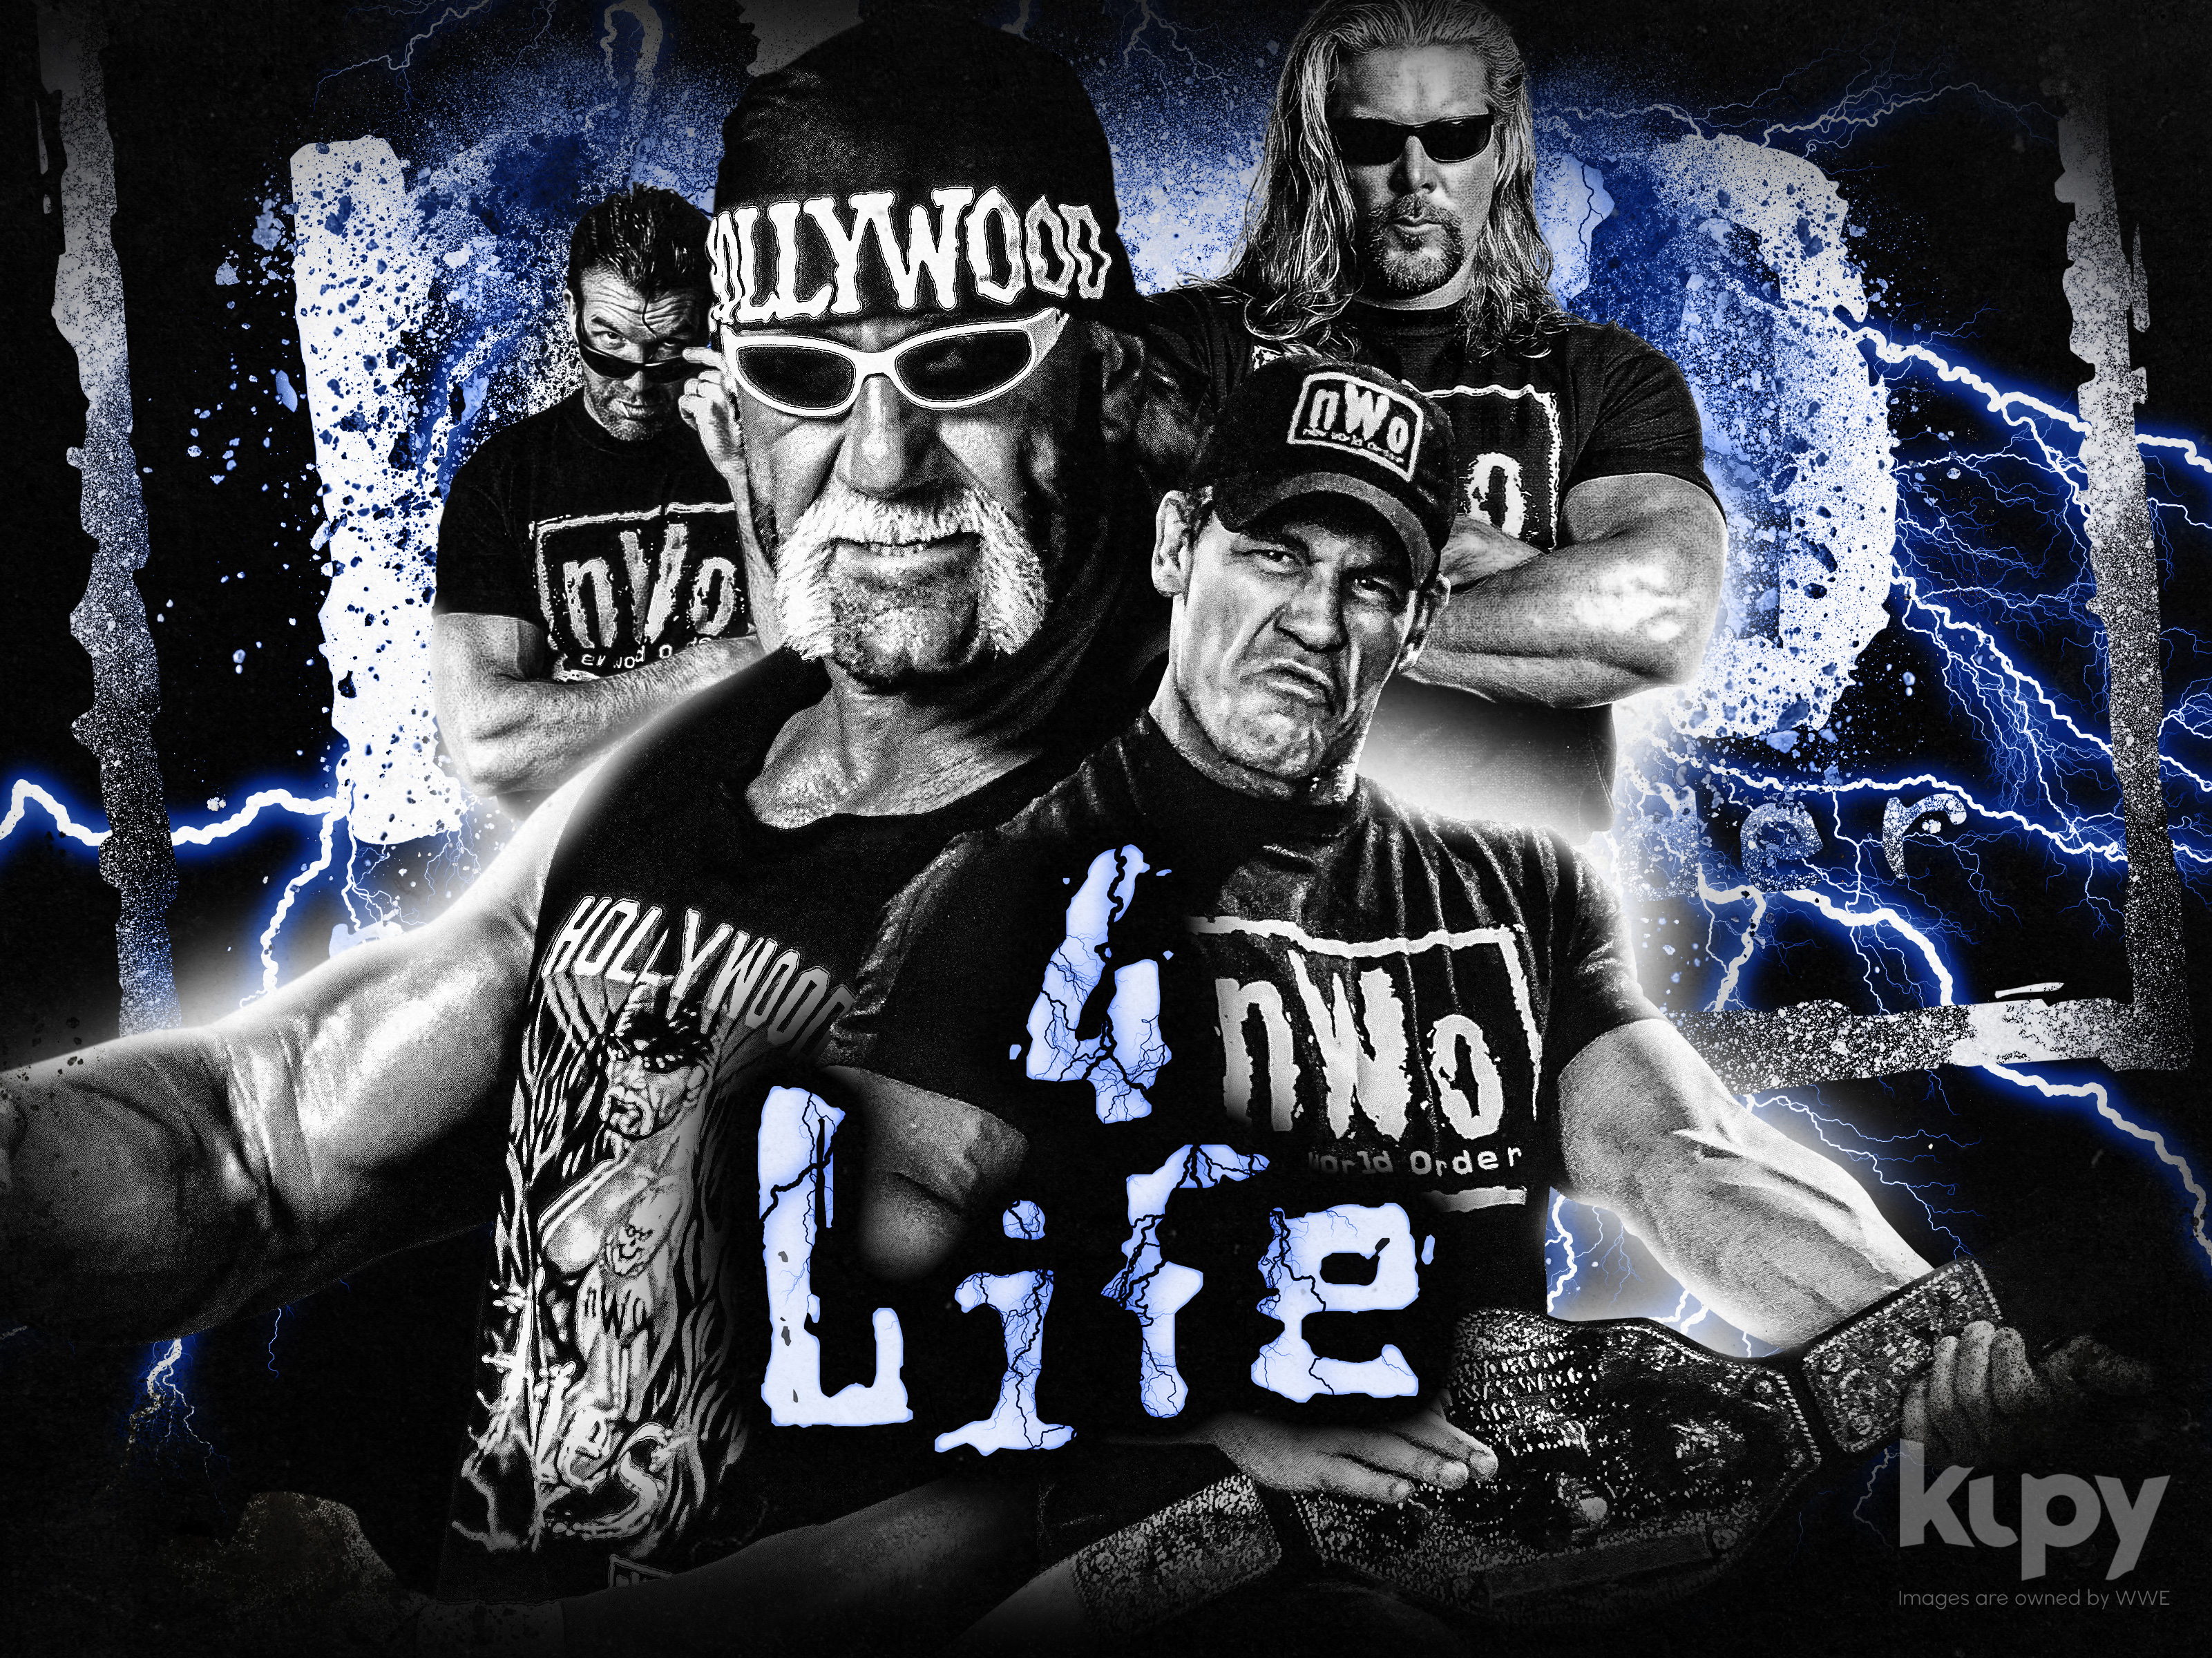 NEW NWO (w/ John Cena) 4 Life retro wallpaper! 